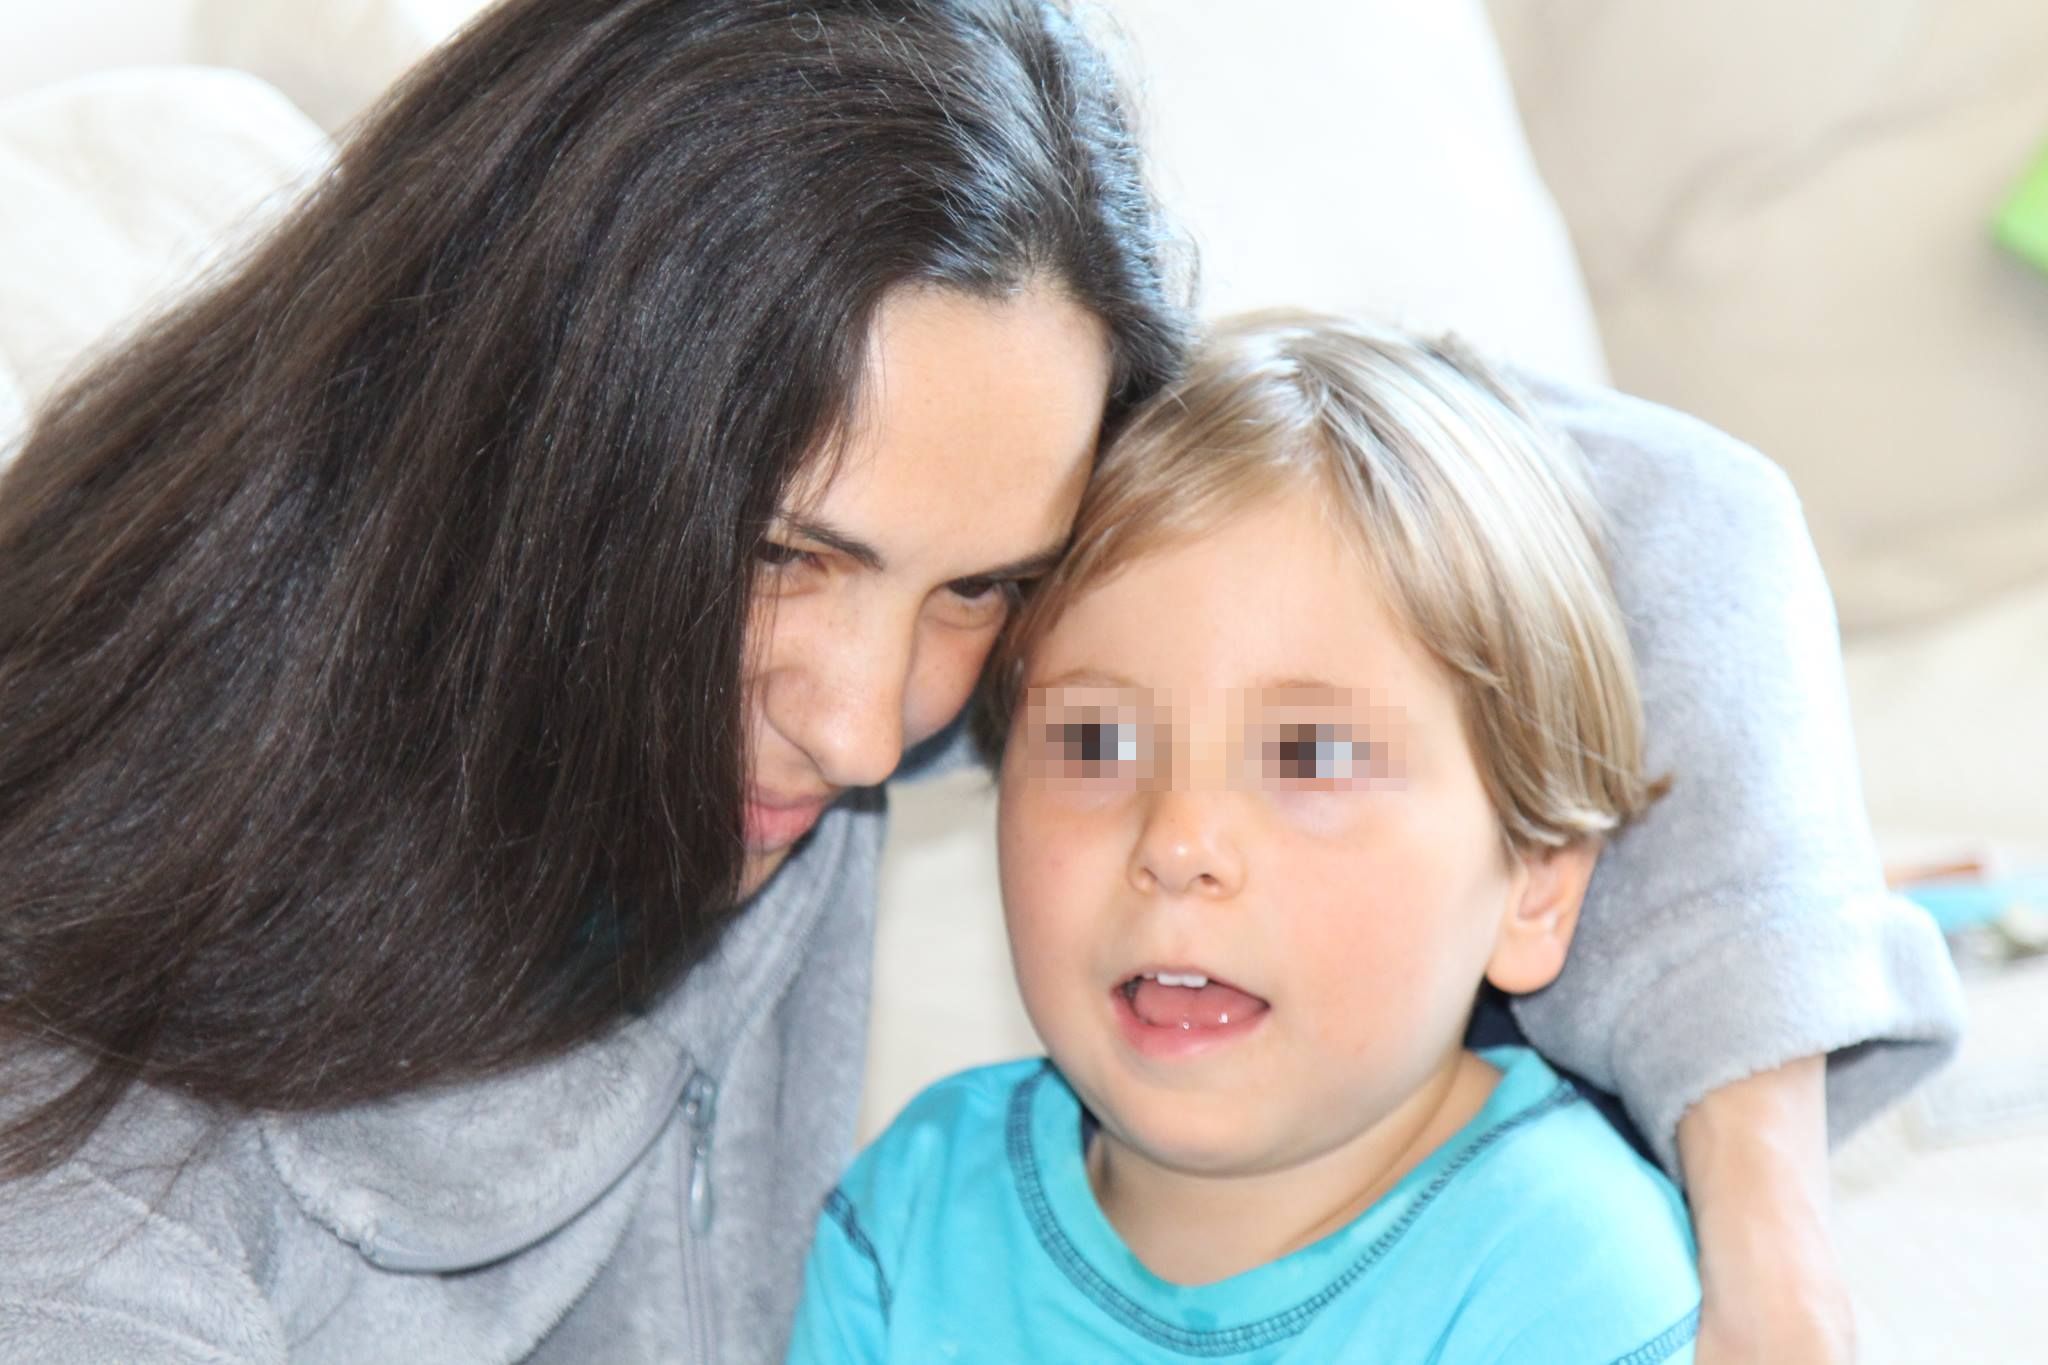 Една българска майка: Помолете се за болното ми детенце навръх Великден!